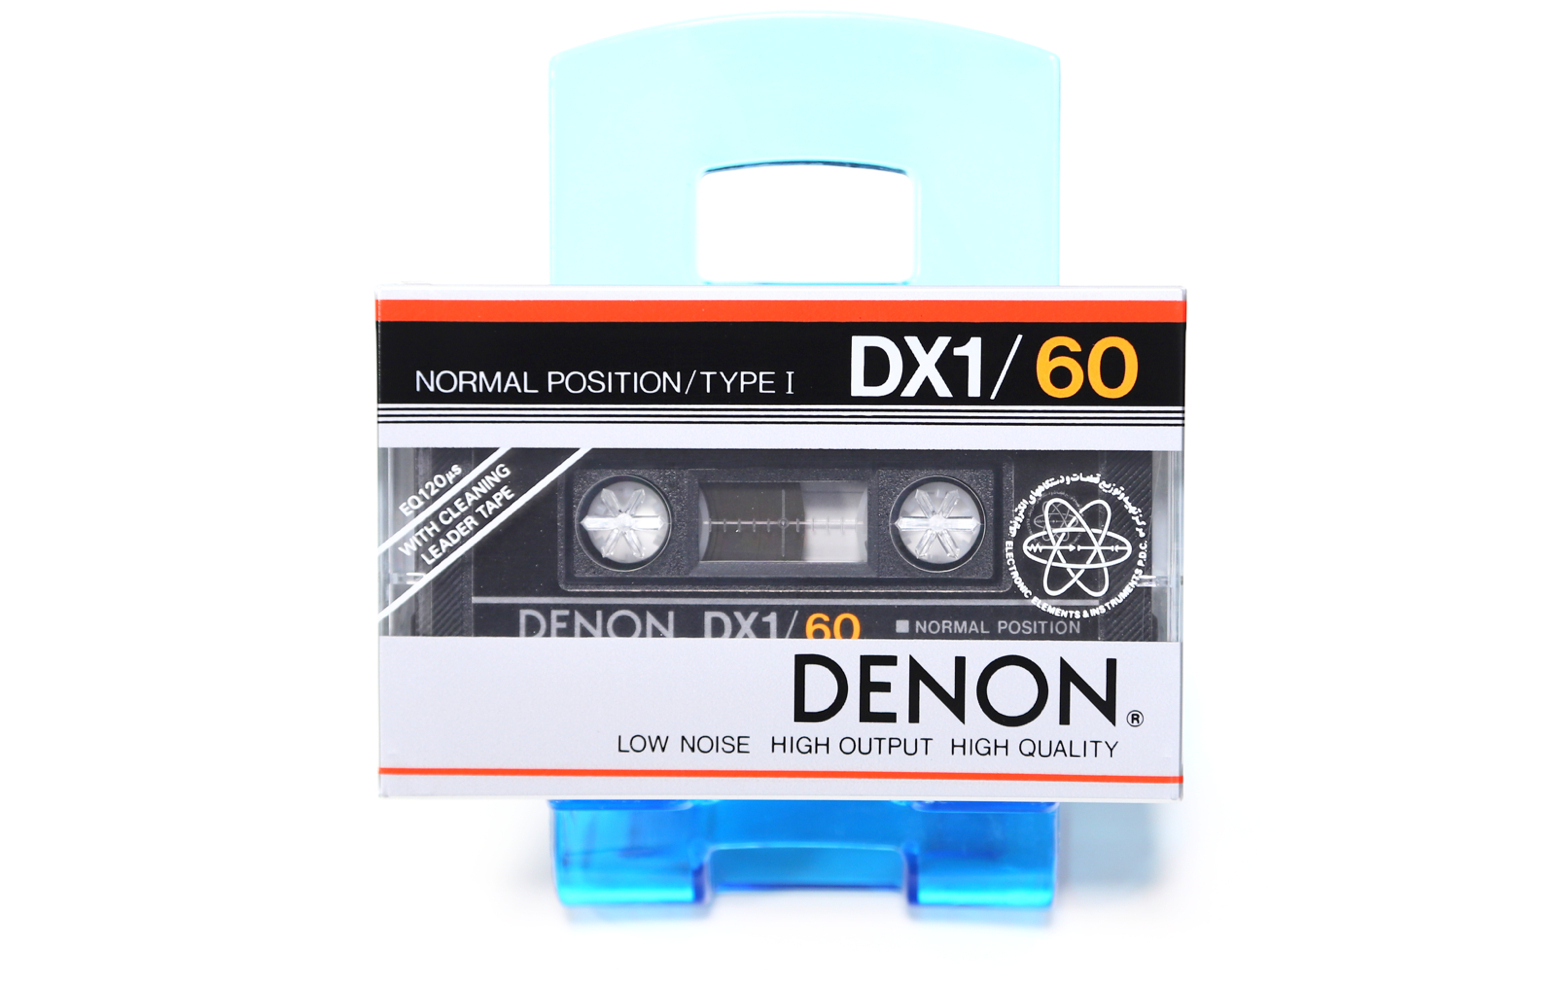 DENON DX1-60 Position Normal